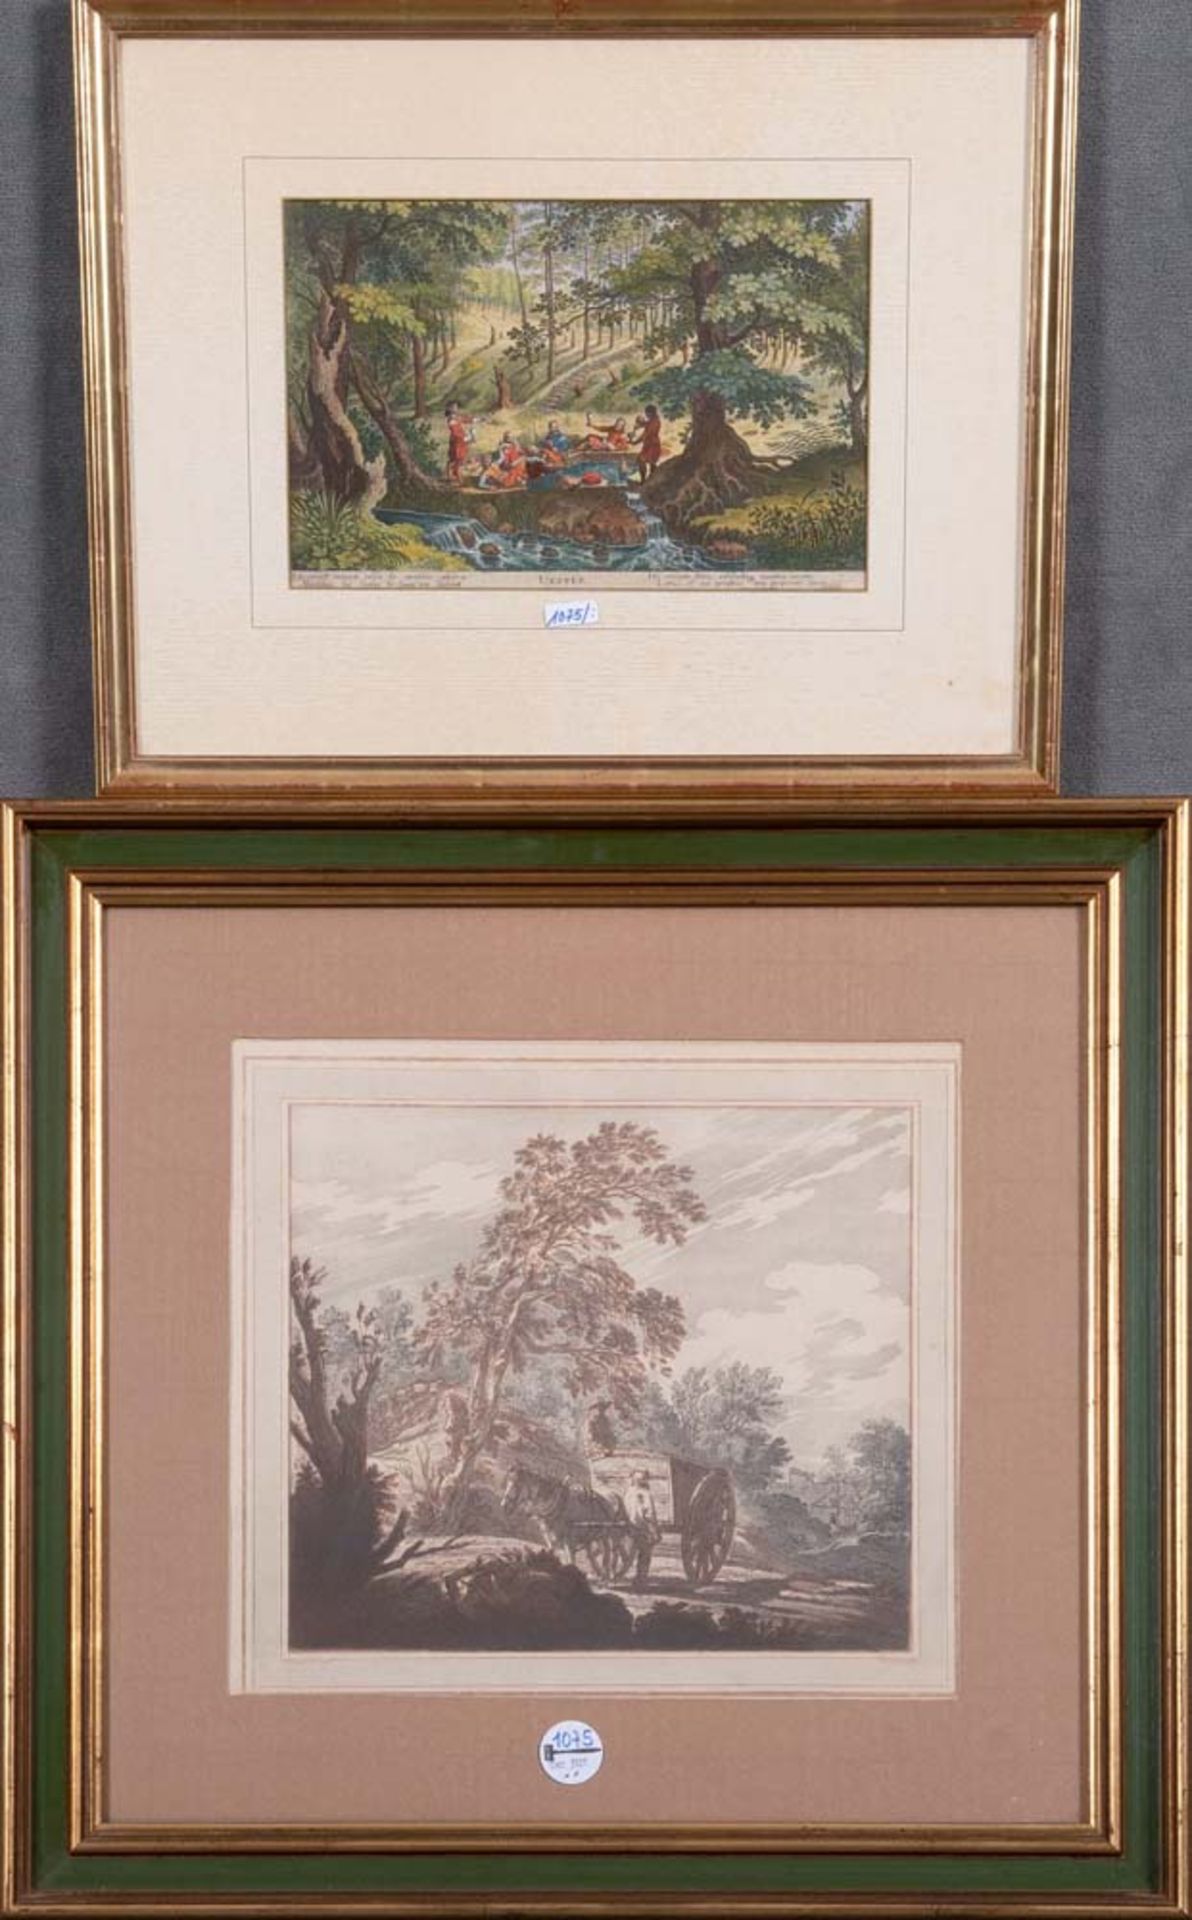 Joseph Farington (1747-1821), Landschaft mit Pferdekarren und Personenstaffage, Aquatinta, li./u. in